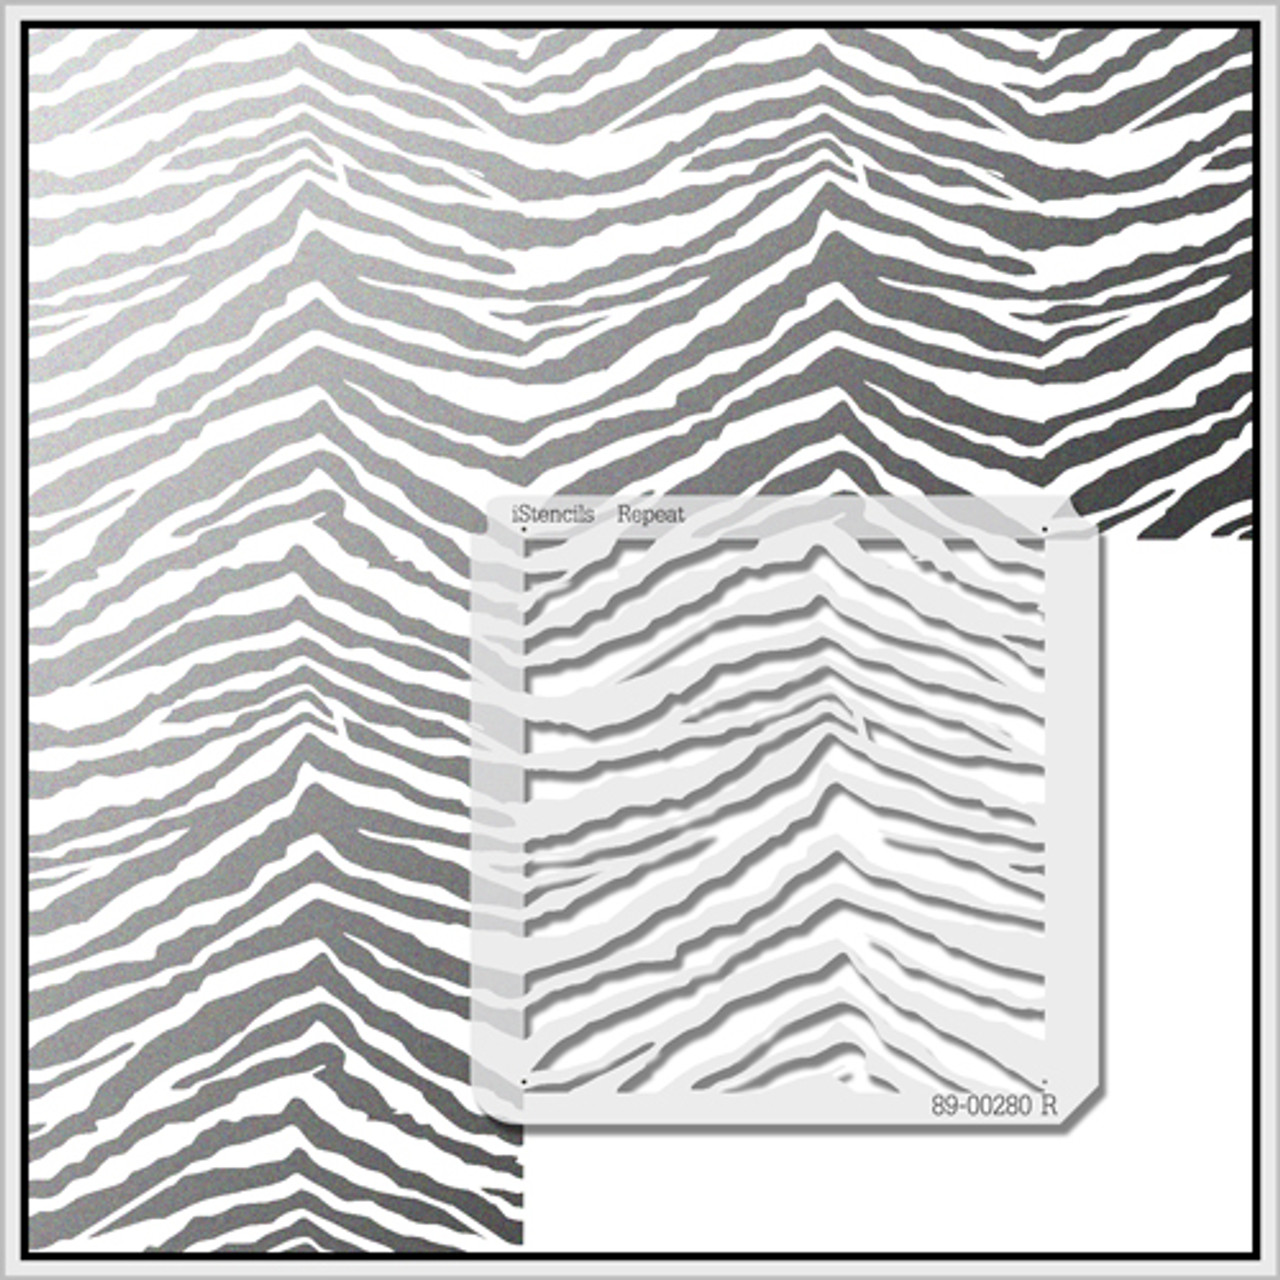 89-00280 R Zebra Print Stencil - iStencils